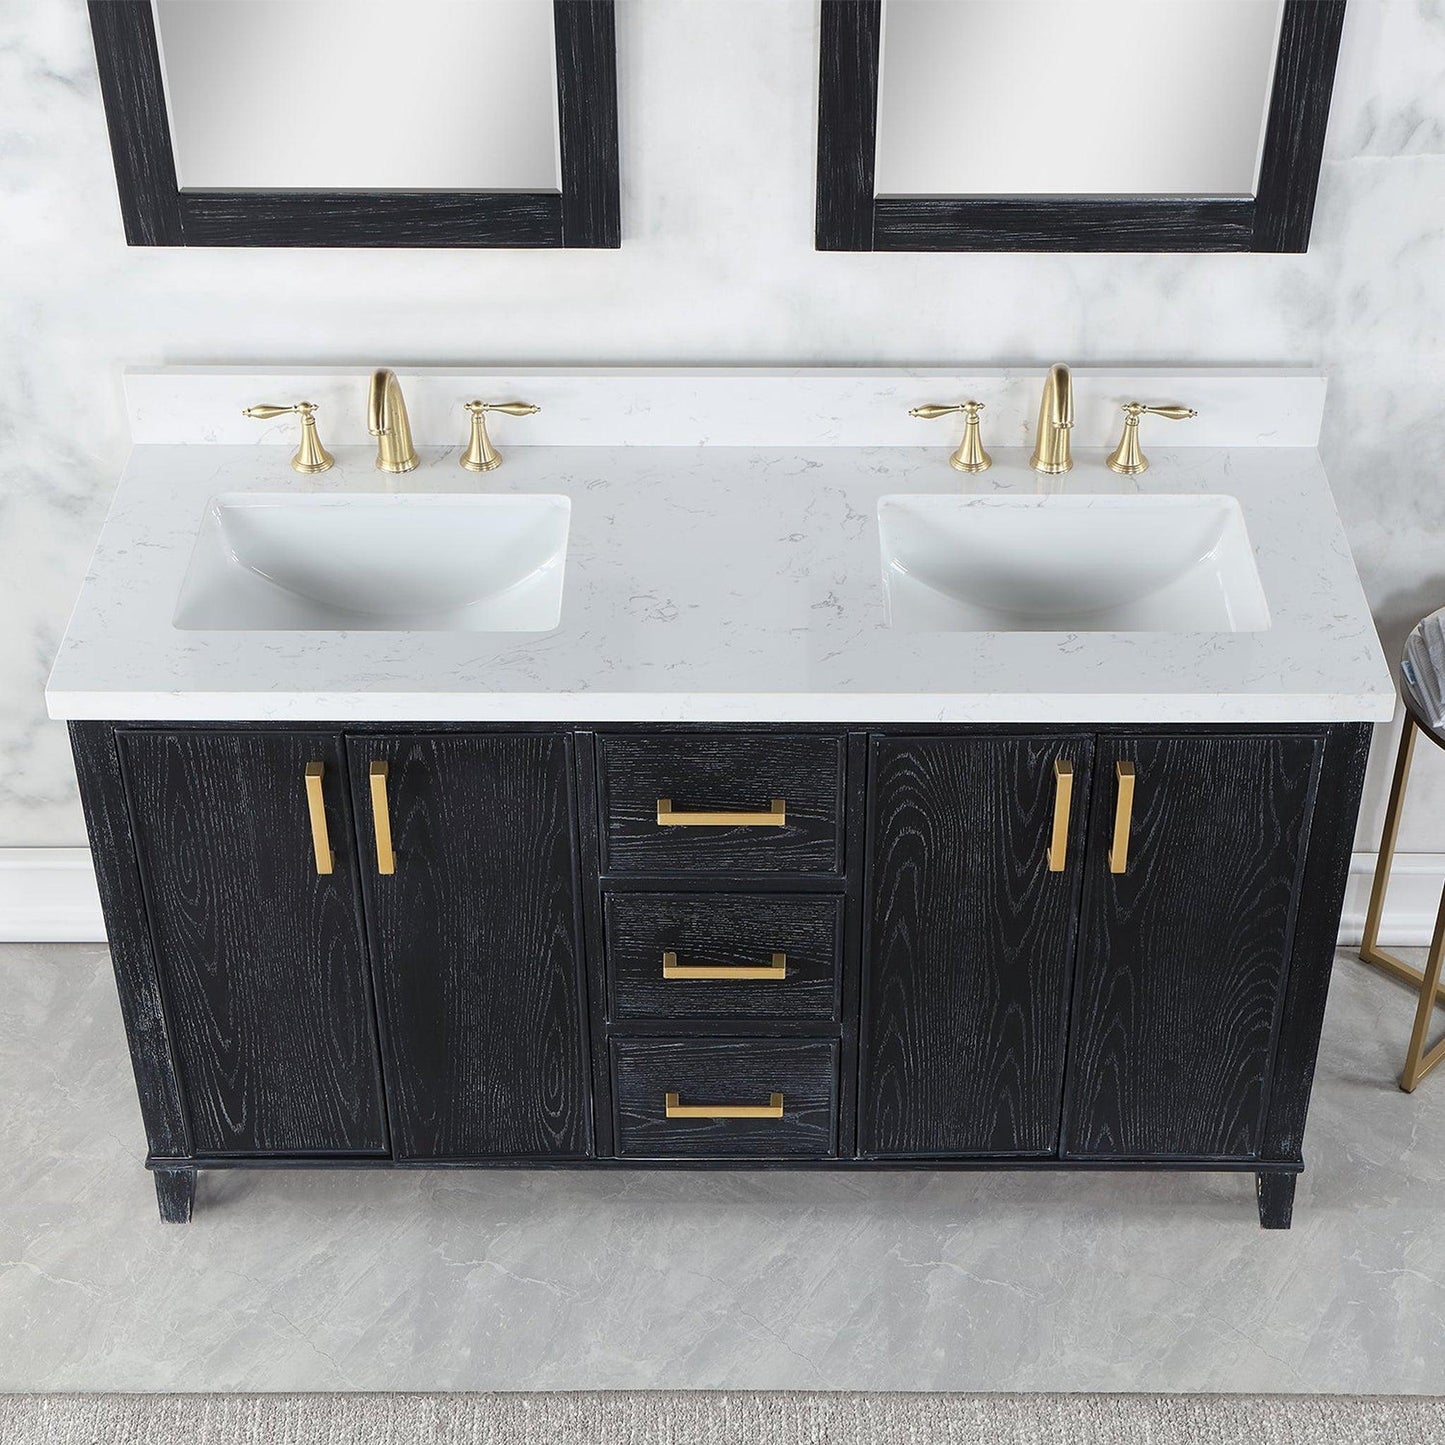 Altair Weiser 60" Black Oak Freestanding Double Bathroom Vanity Set With Mirror, Aosta White Composite Stone Top, Double Rectangular Undermount Ceramic Sinks, Overflow, and Backsplash